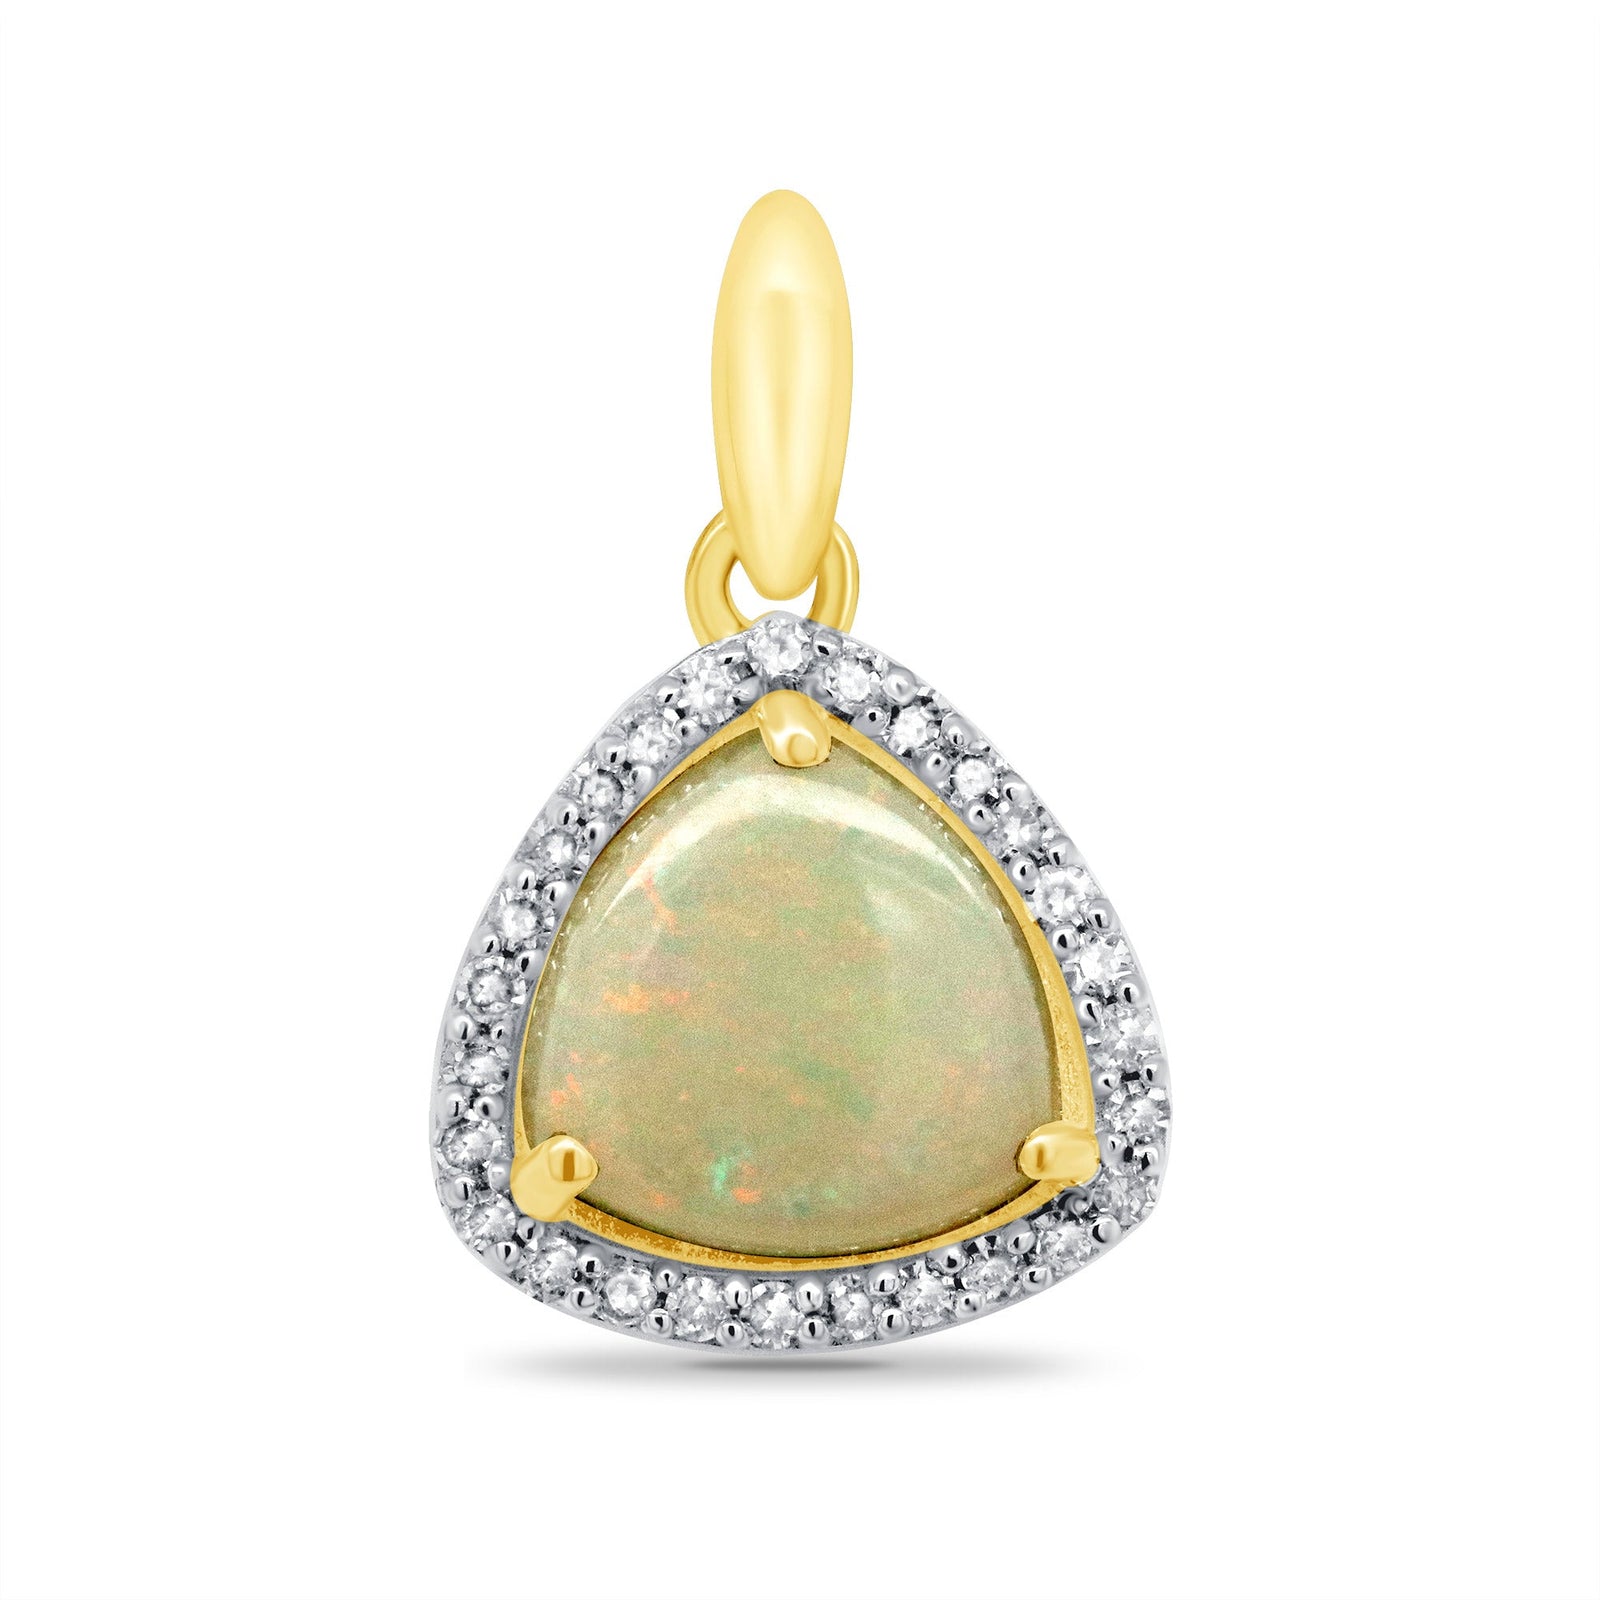 9ct gold 8mm trillion shape opal & diamond cluster pendant 0.11ct